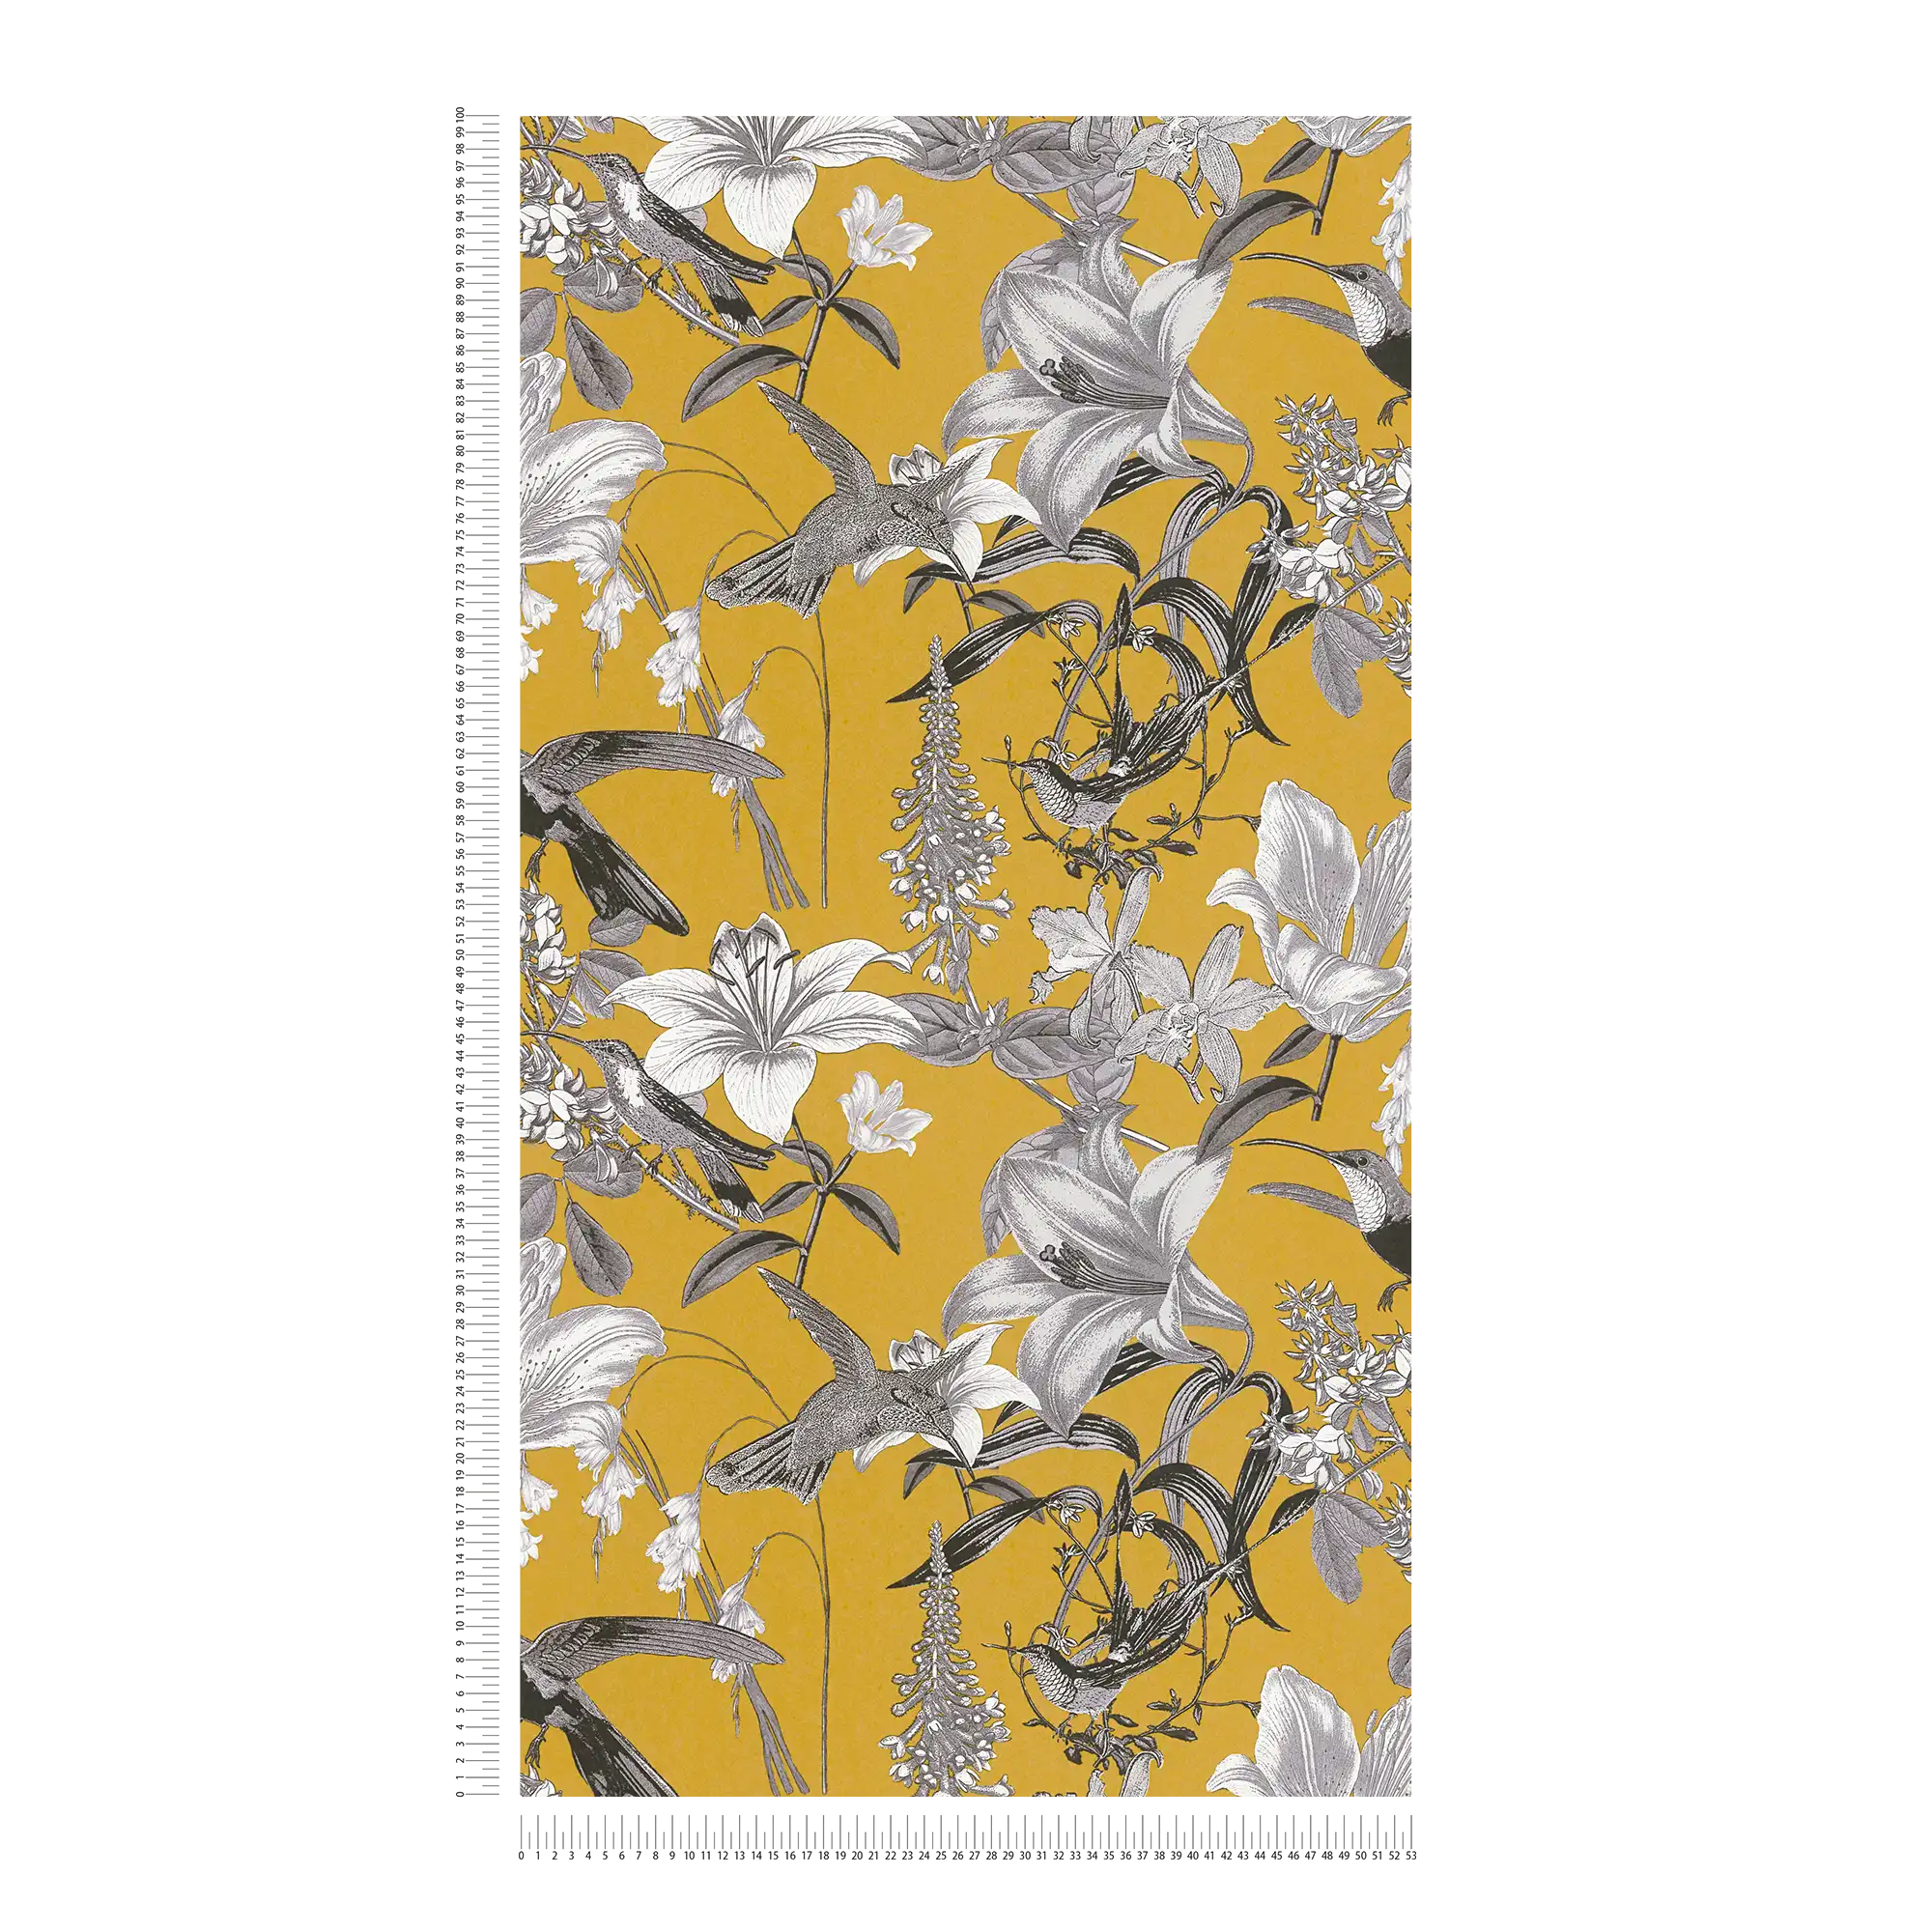             Flowers wallpaper mustard yellow with flowers & hummingbird pattern - yellow, grey, black
        